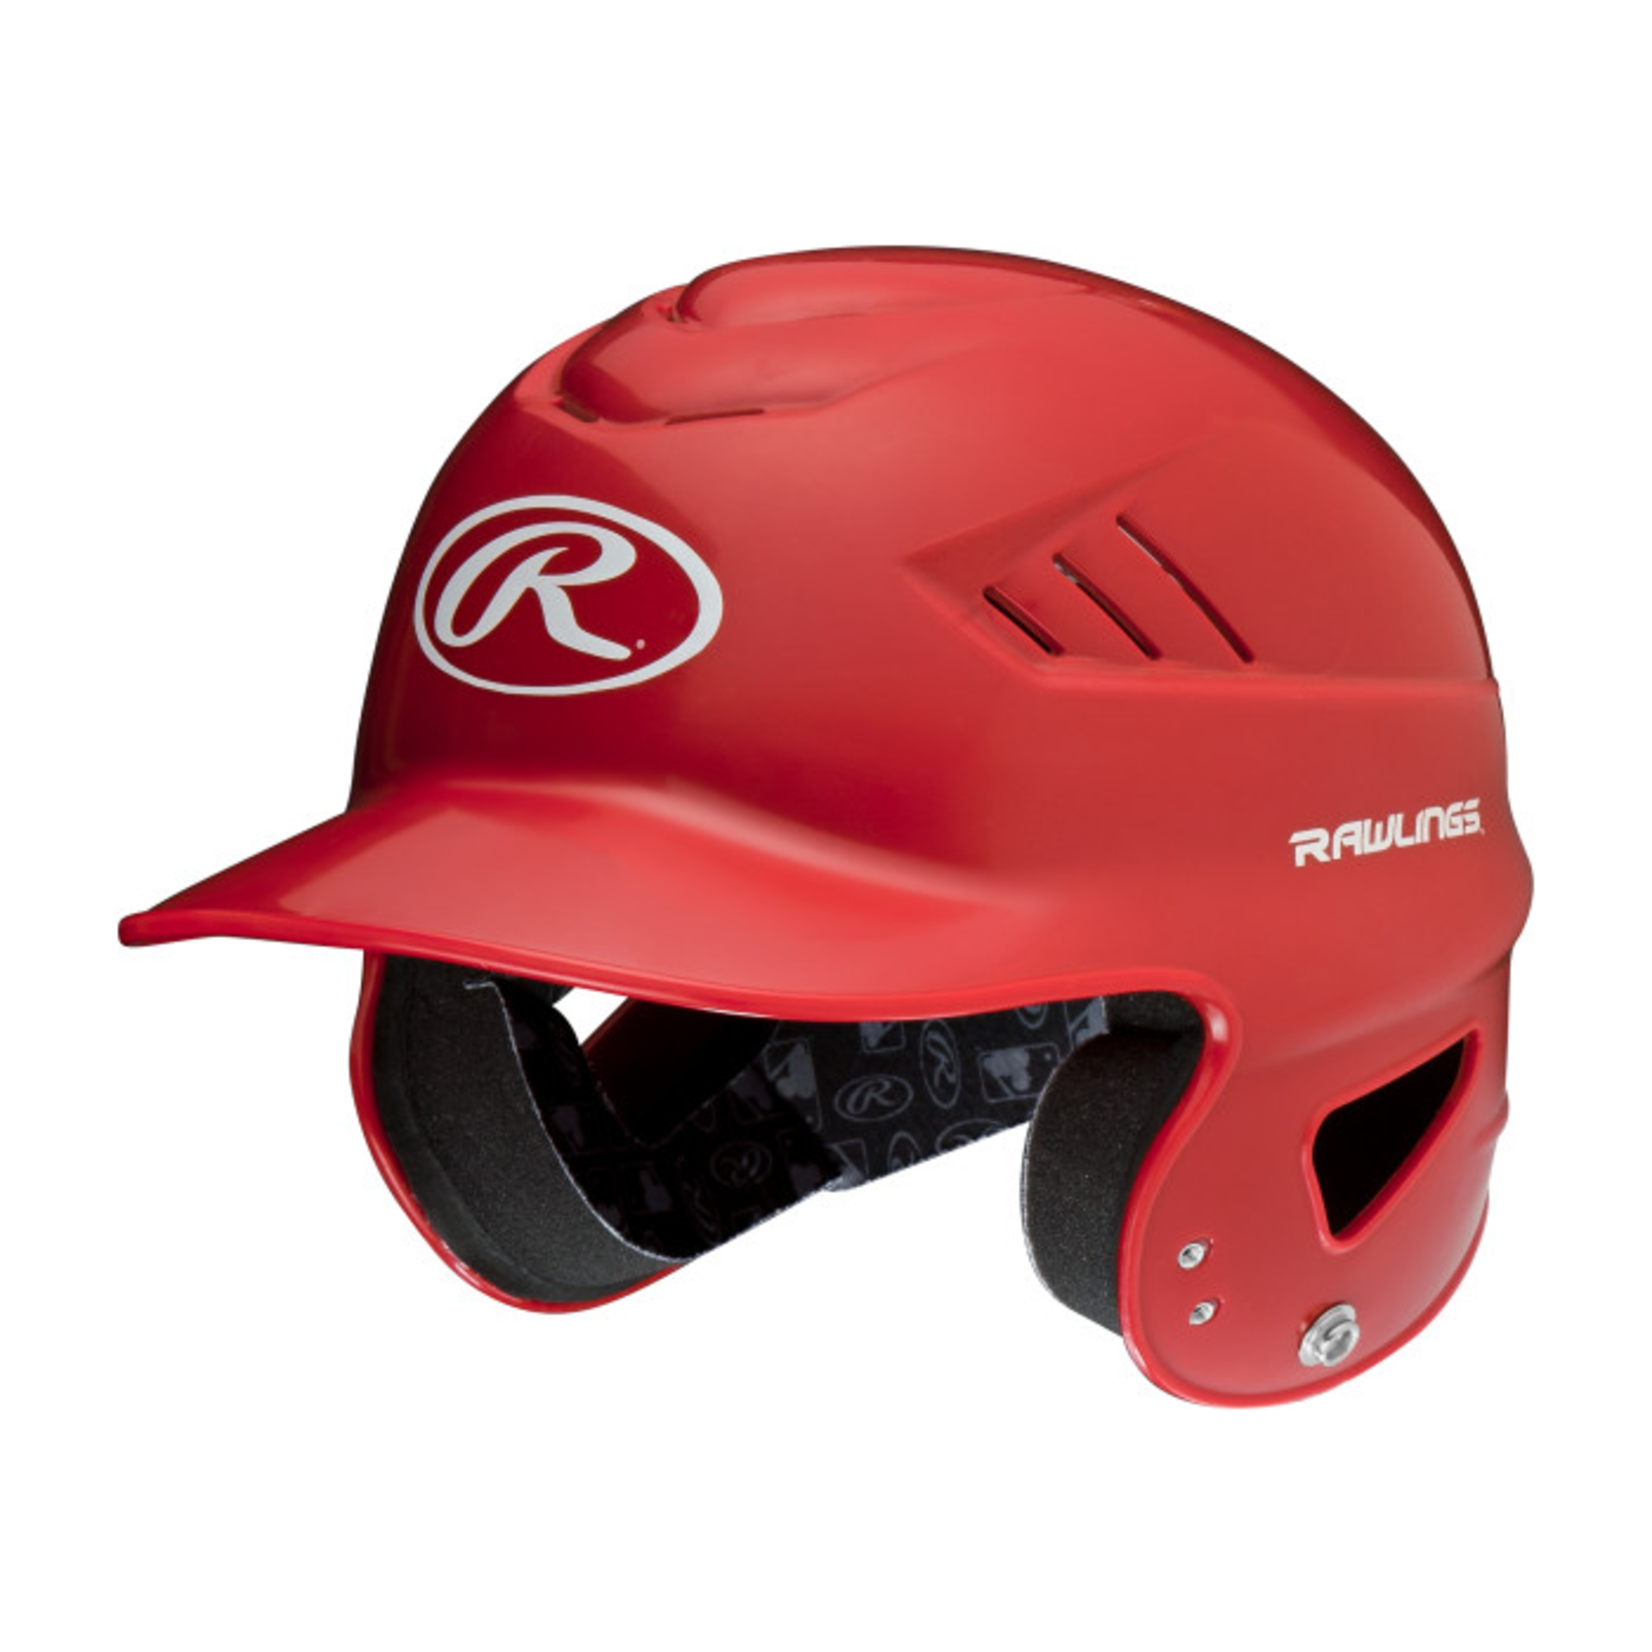 Rawlings Rawlings Coolflo - Batting Helmet Senior